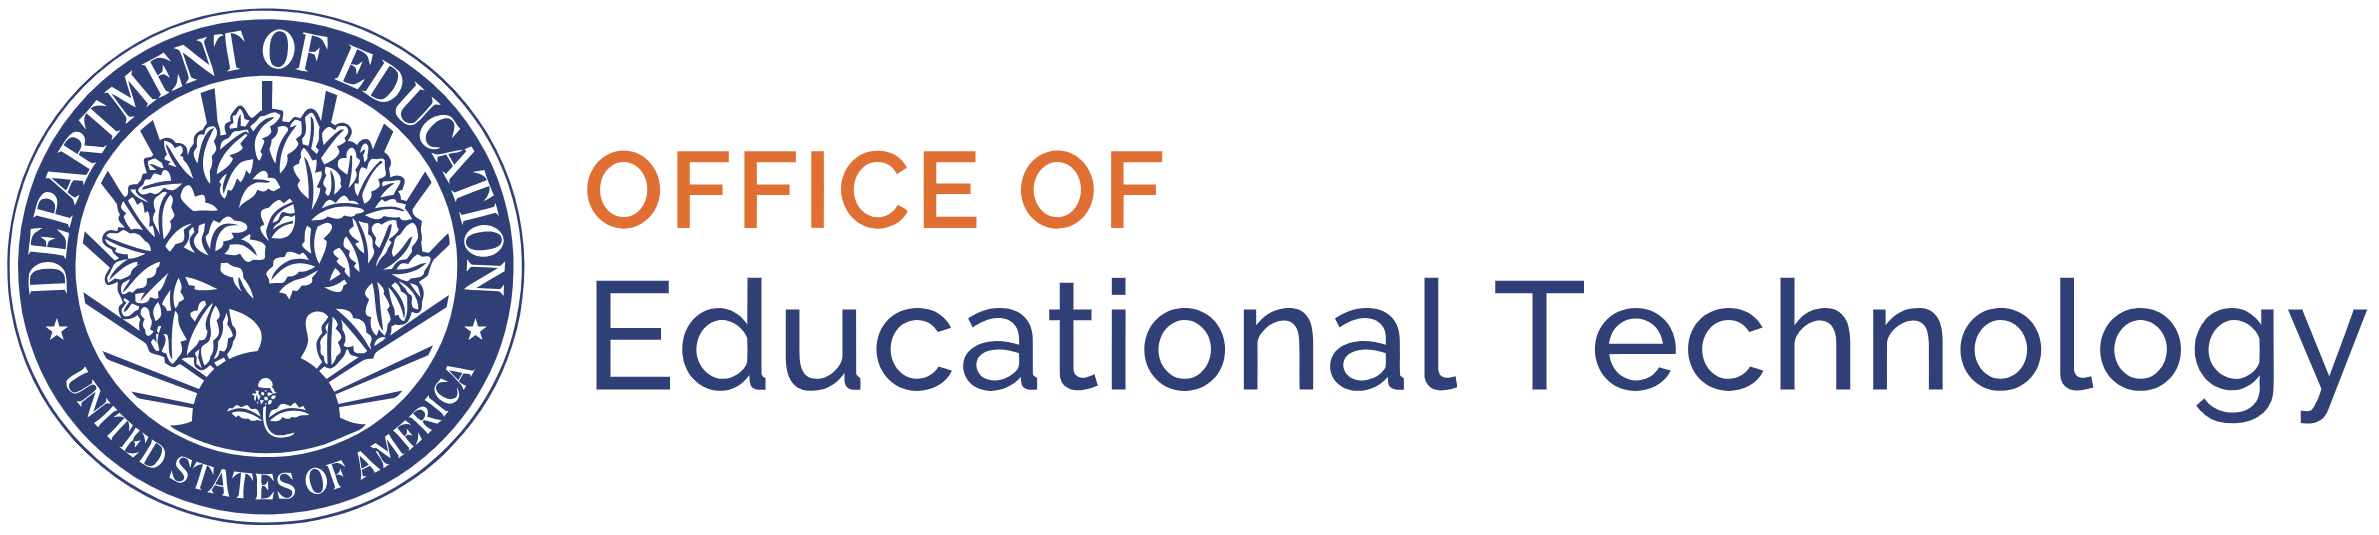 Office of Educational Technology Logo